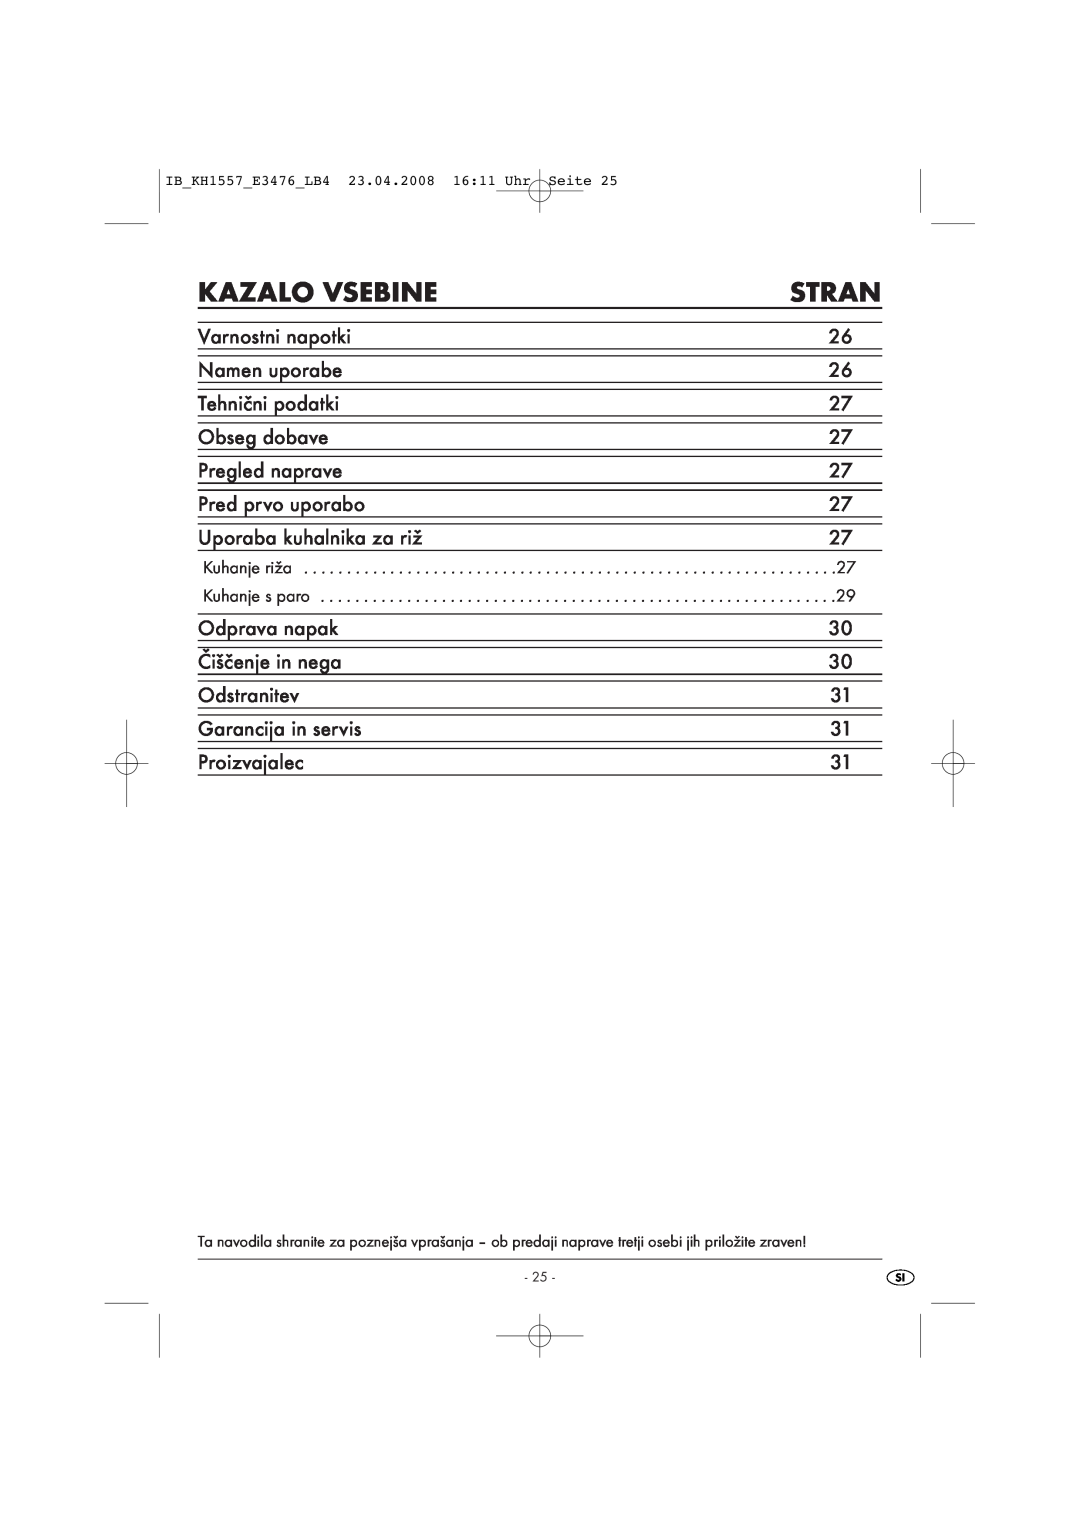 Kompernass KH 1557 operating instructions Kazalo Vsebine, Stran 